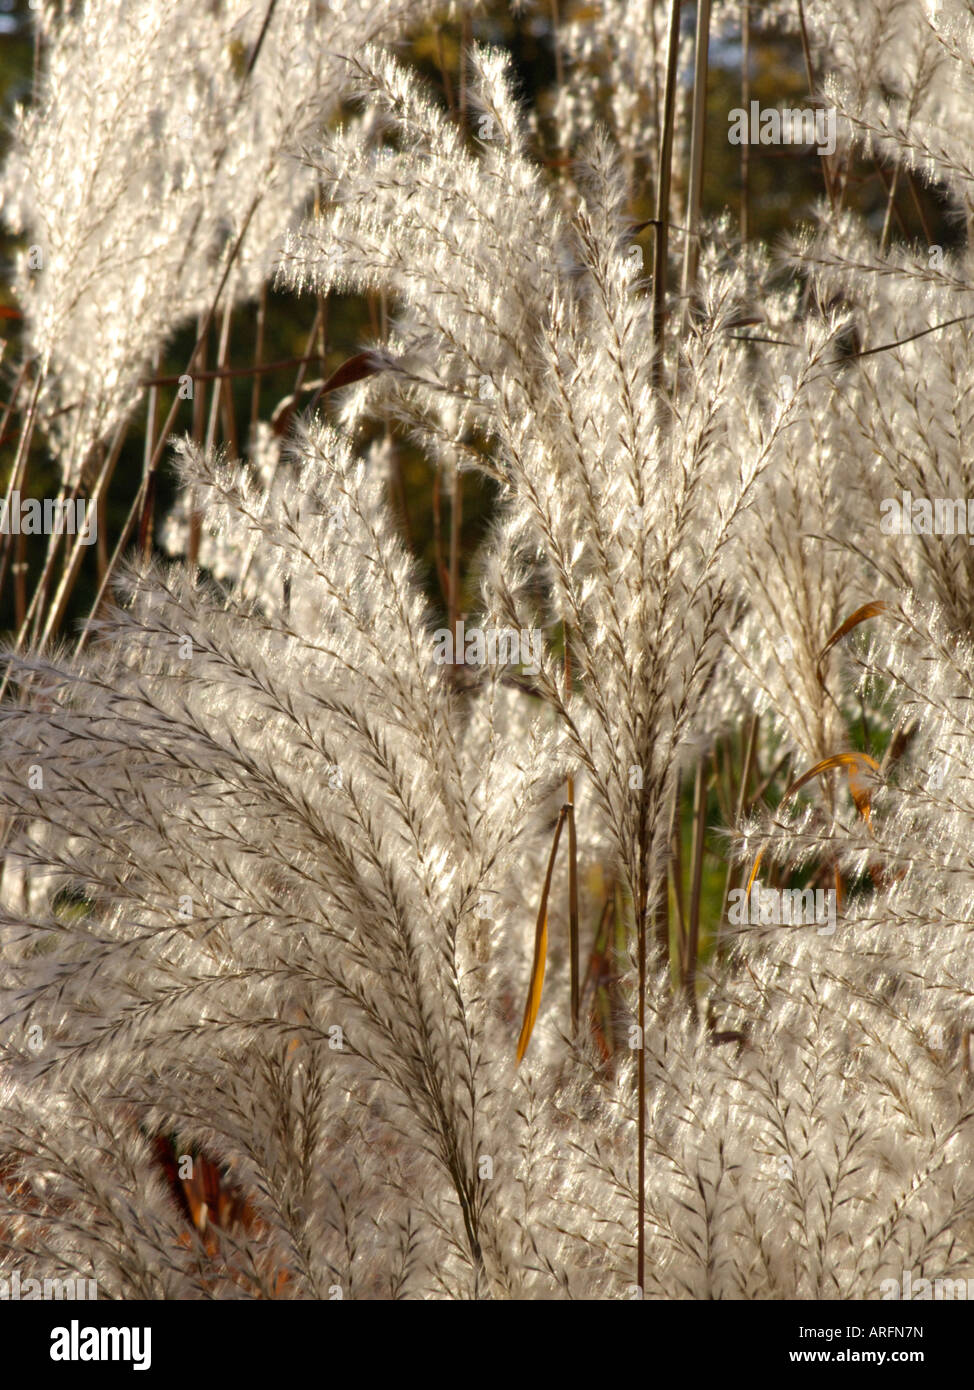 Amur silver grass (Miscanthus sacchariflorus) Stock Photo